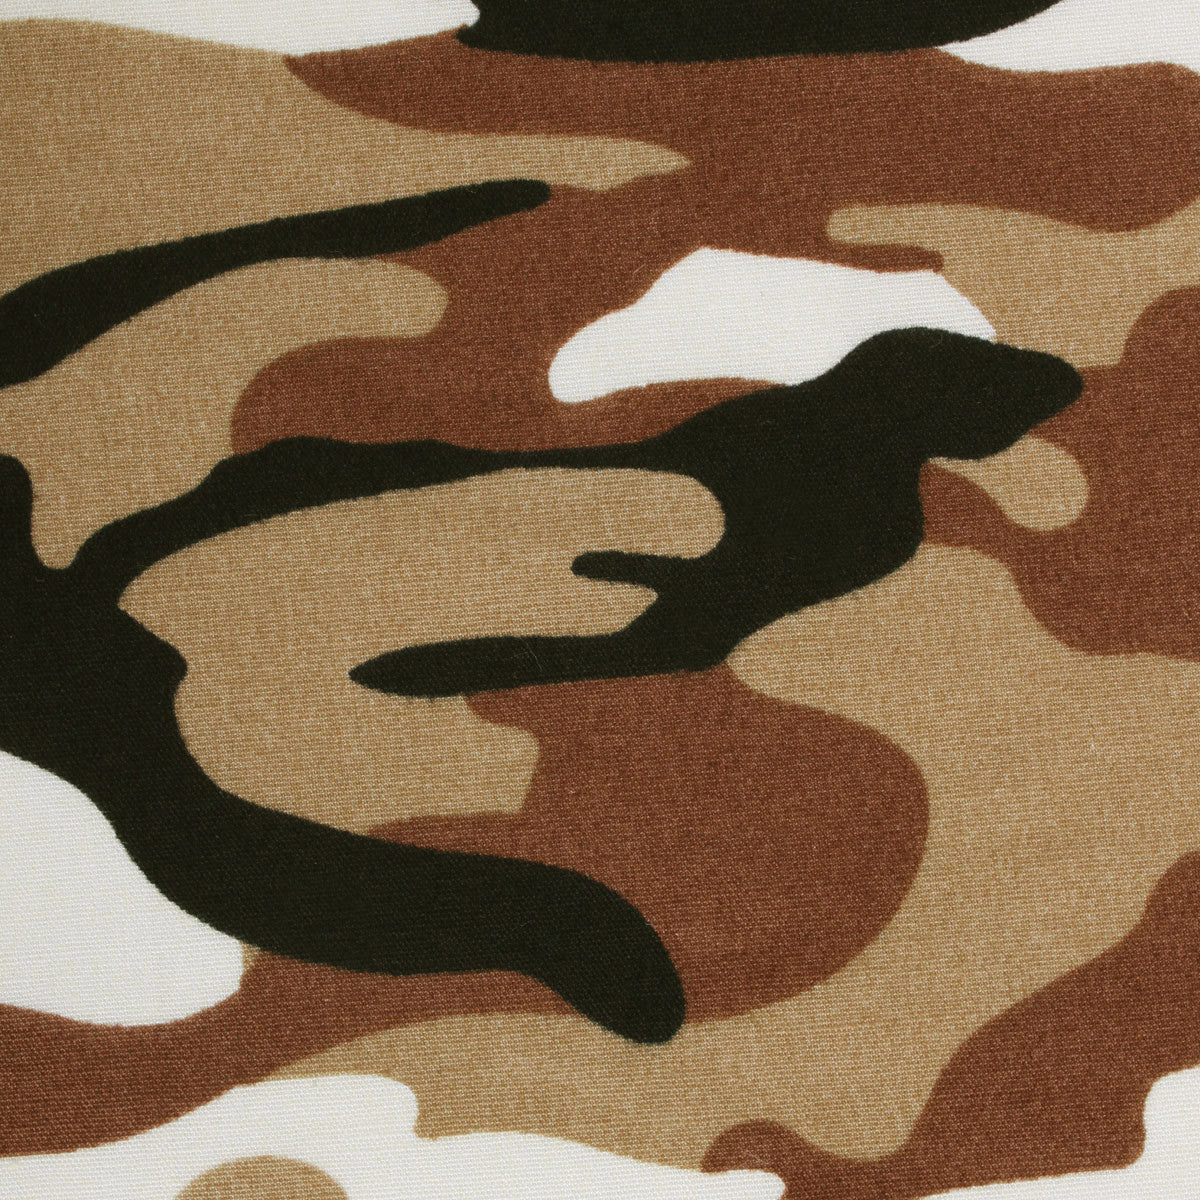 Desert Sand Camouflage Fabric Self Bowtie